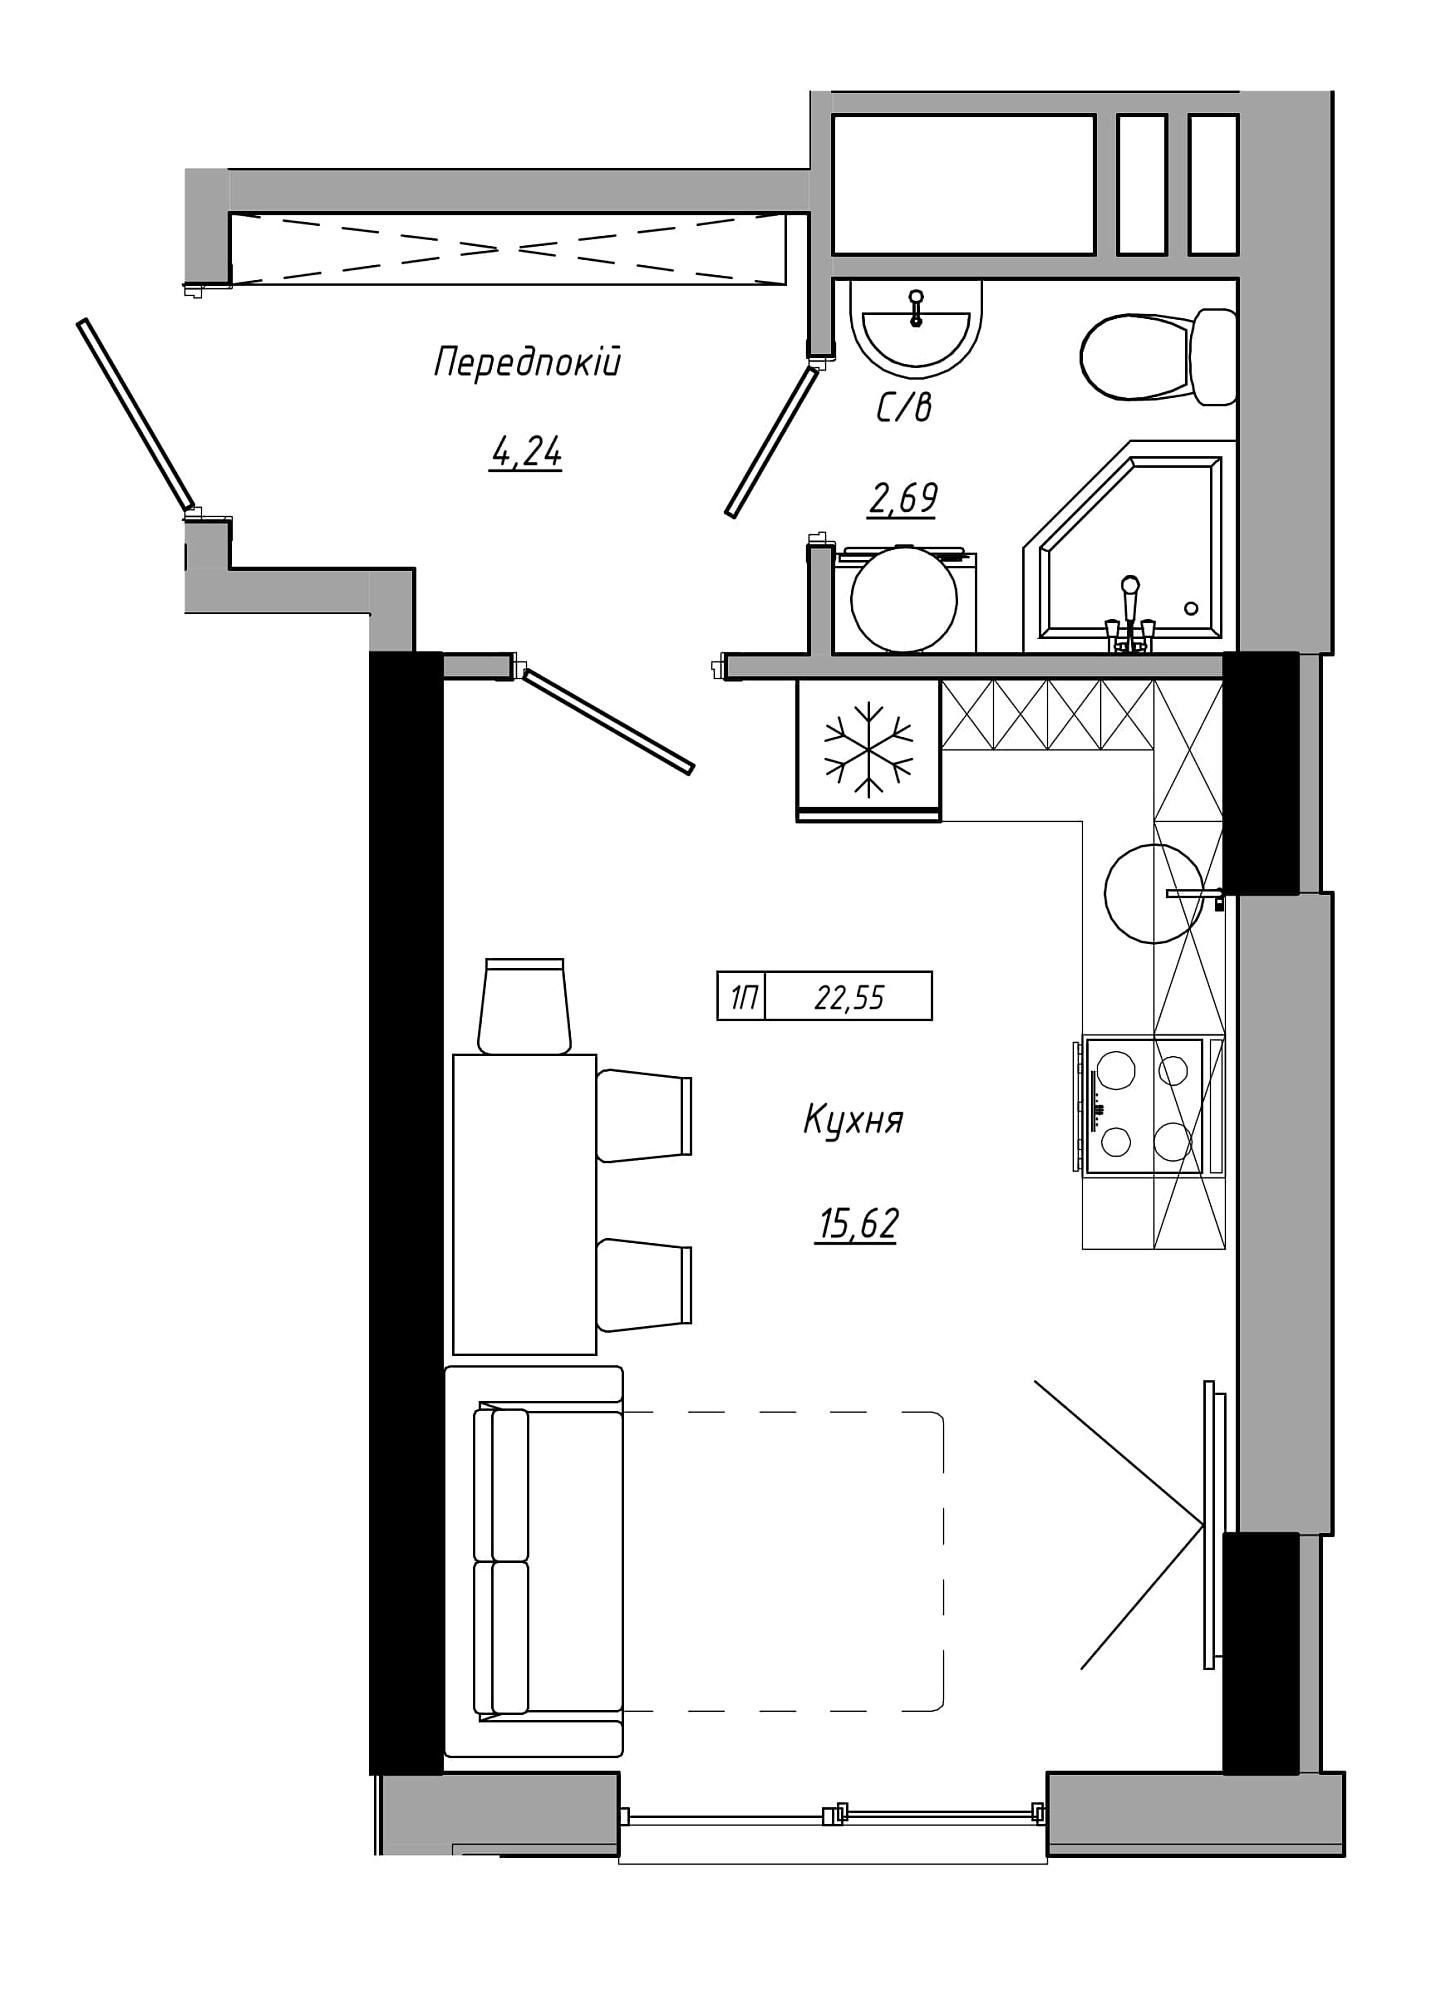 Planning Smart flats area 22.55m2, AB-21-06/00018.